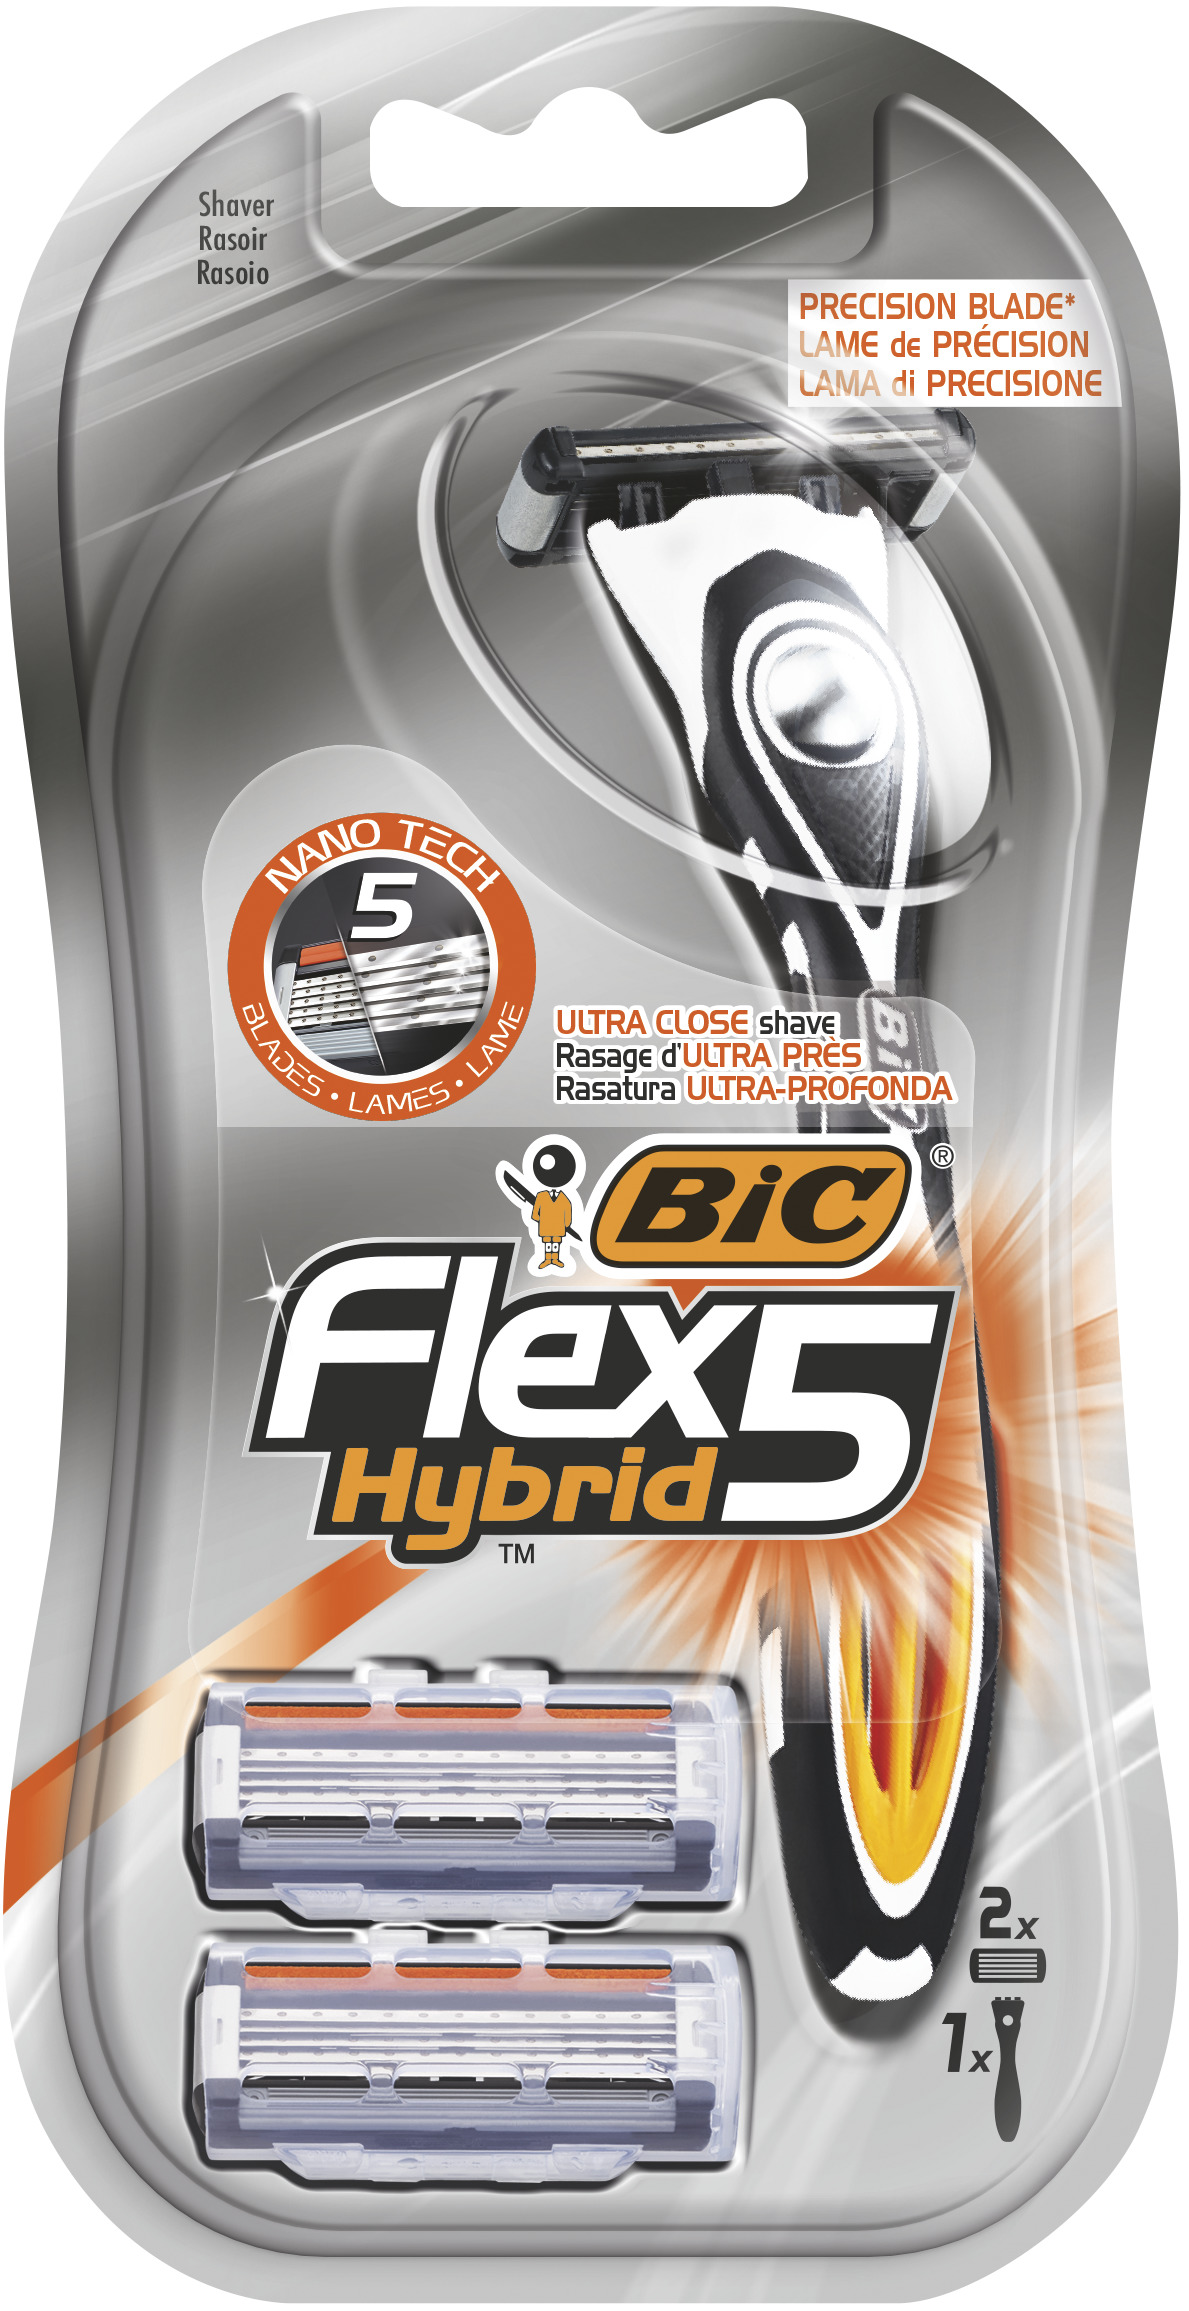 Станок для бритья BIC Flex 5 Hybrid + 2 кассеты станок для бритья bic flex 3 hybrid 2 кассеты